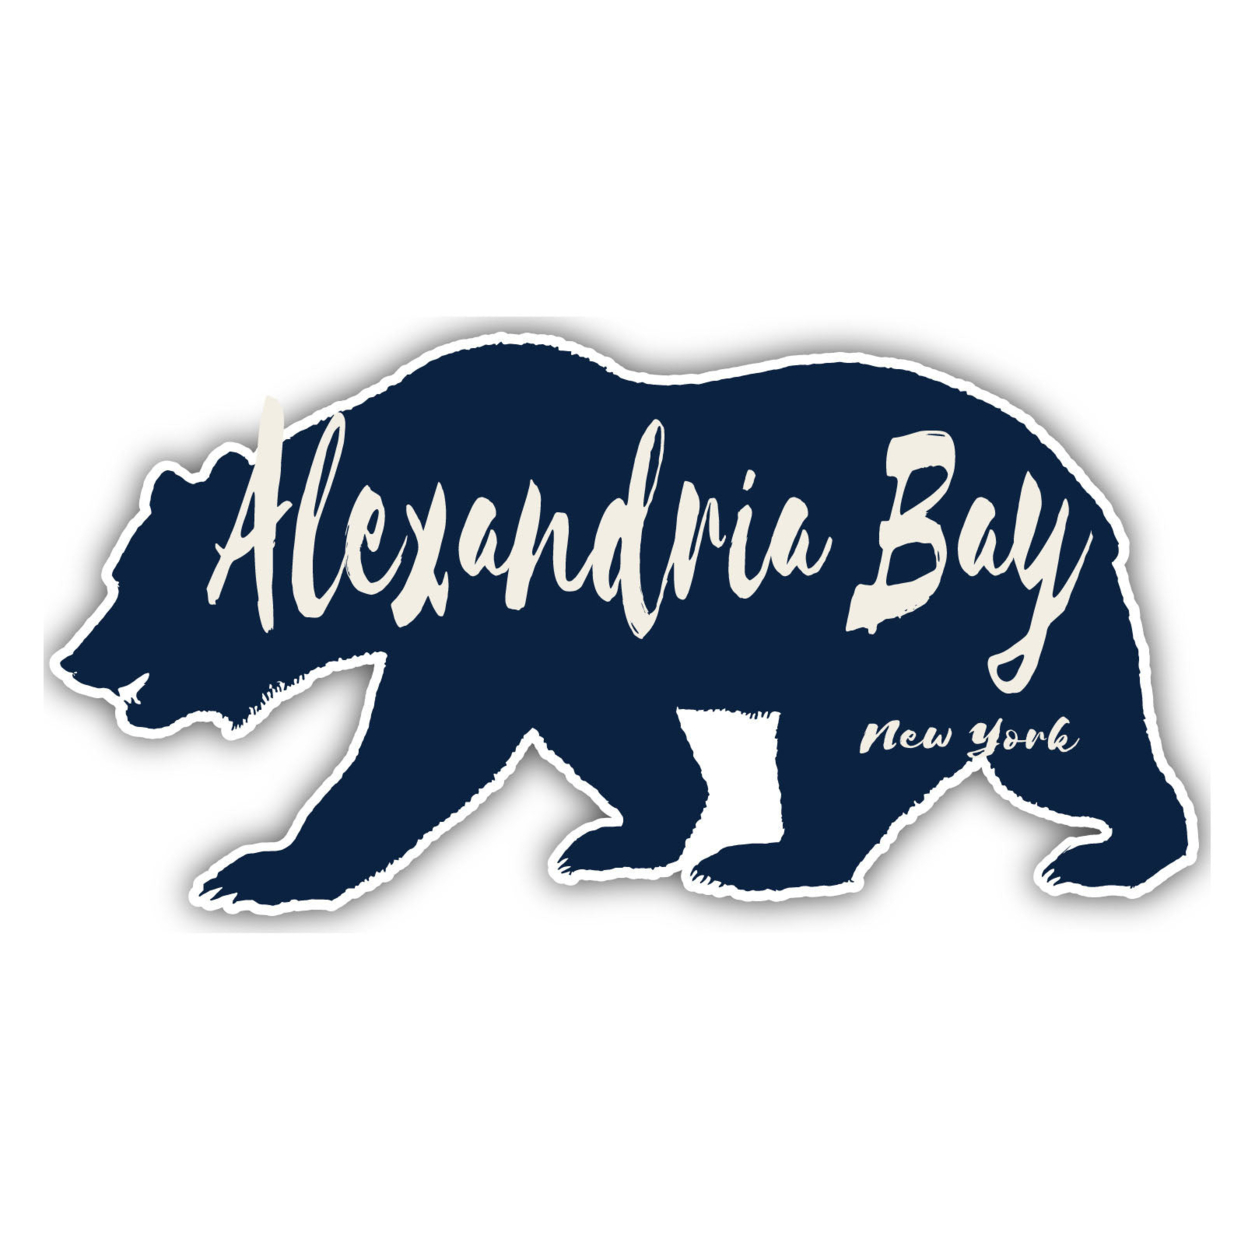 Alexandria Bay New York Souvenir Decorative Stickers (Choose Theme And Size) - Single Unit, 8-Inch, Tent